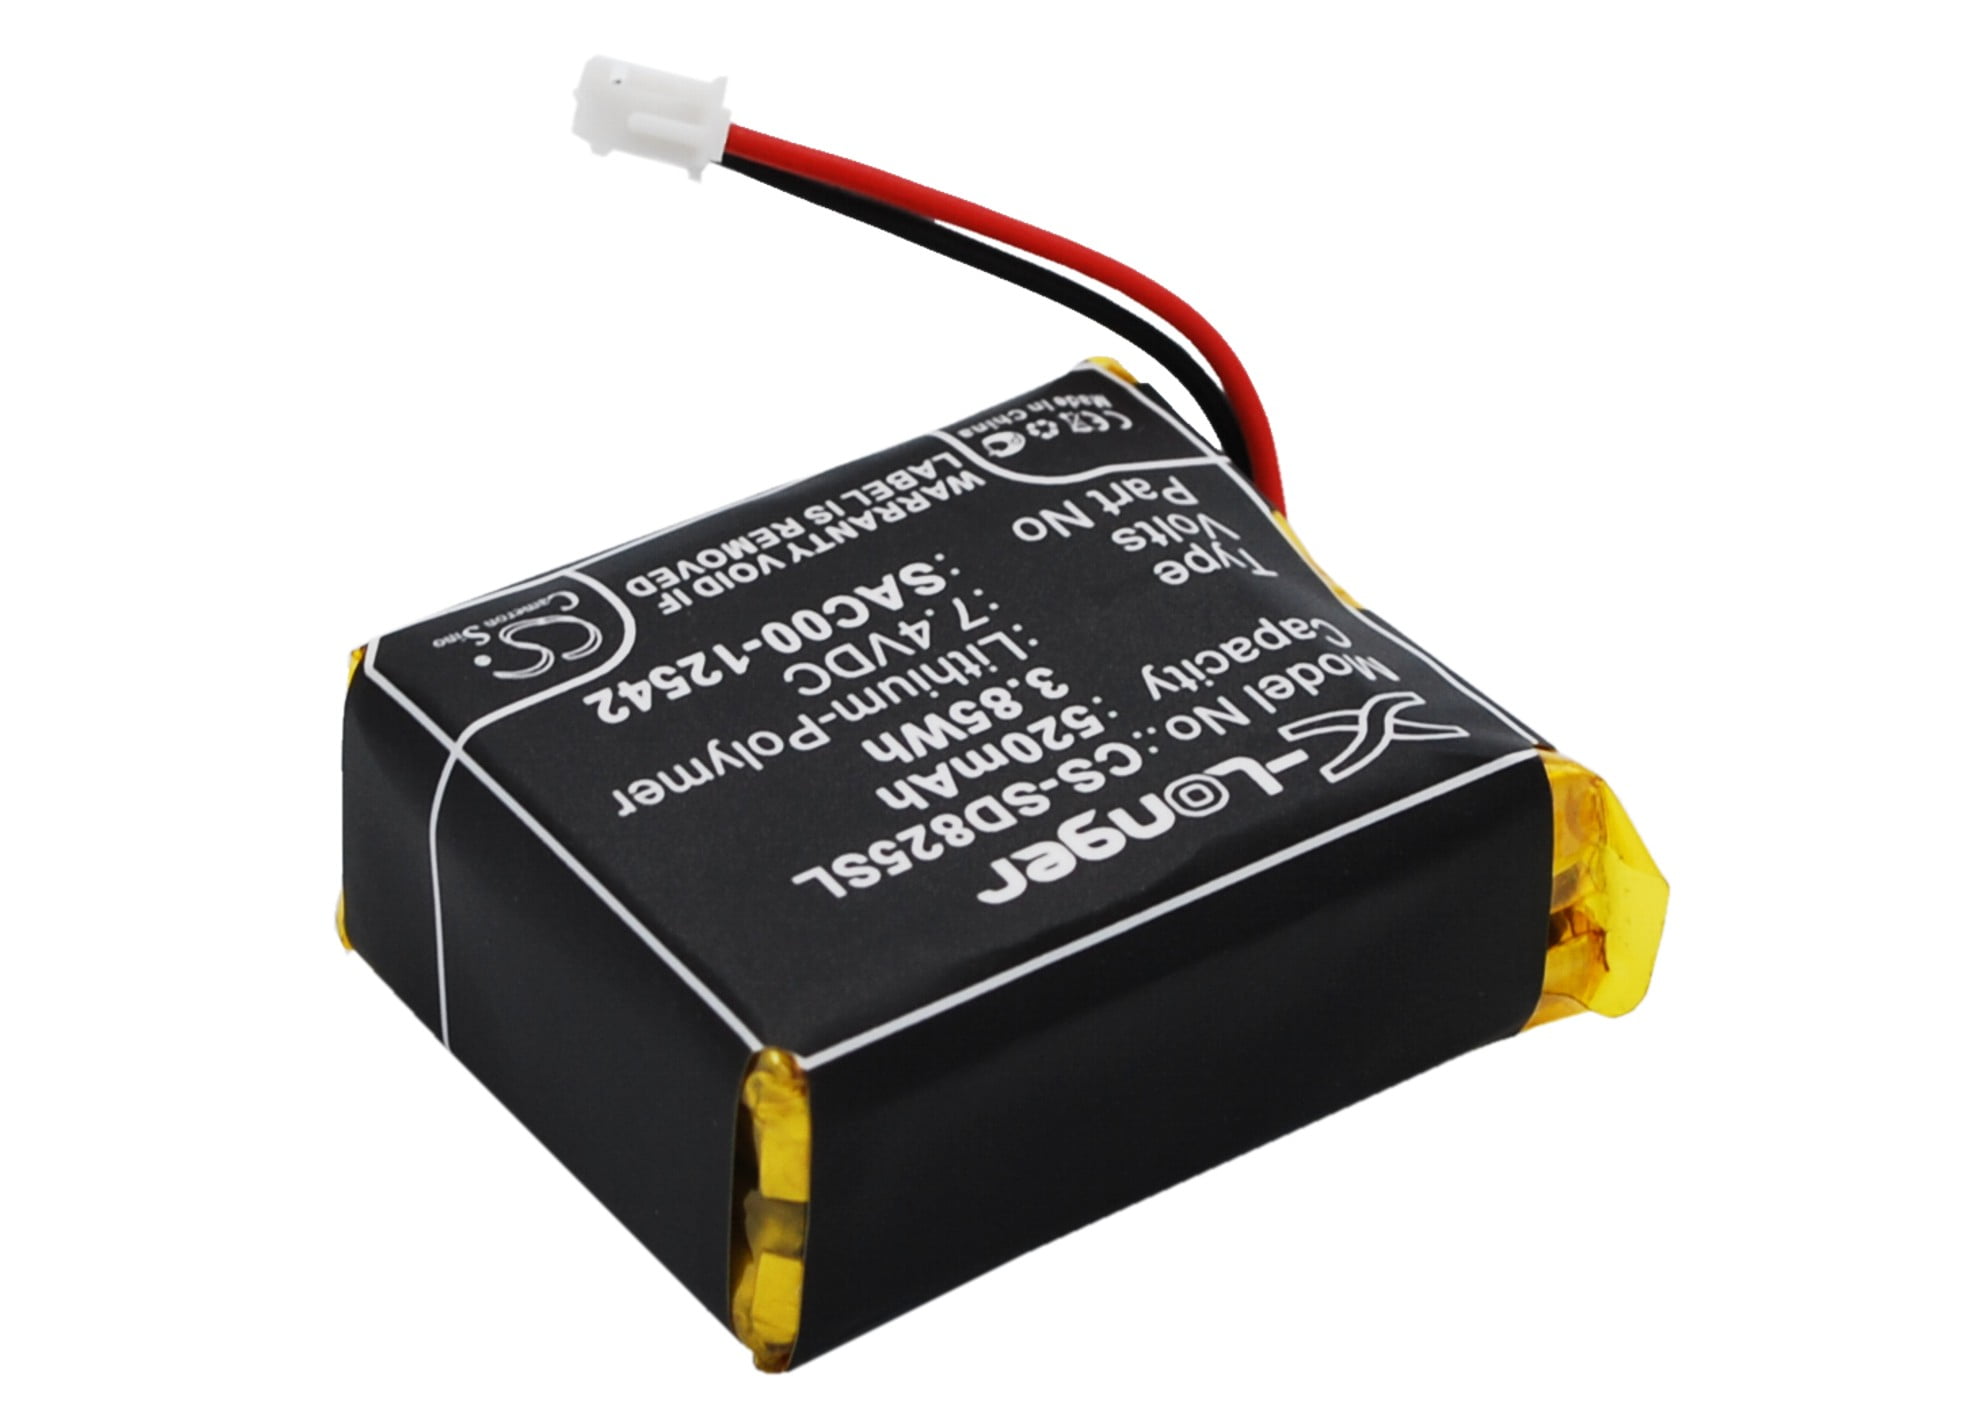 SD-3225 SD-1825CAMO SportDOG SAC00-12542 Transmitter Battery Kit for SD-1825 